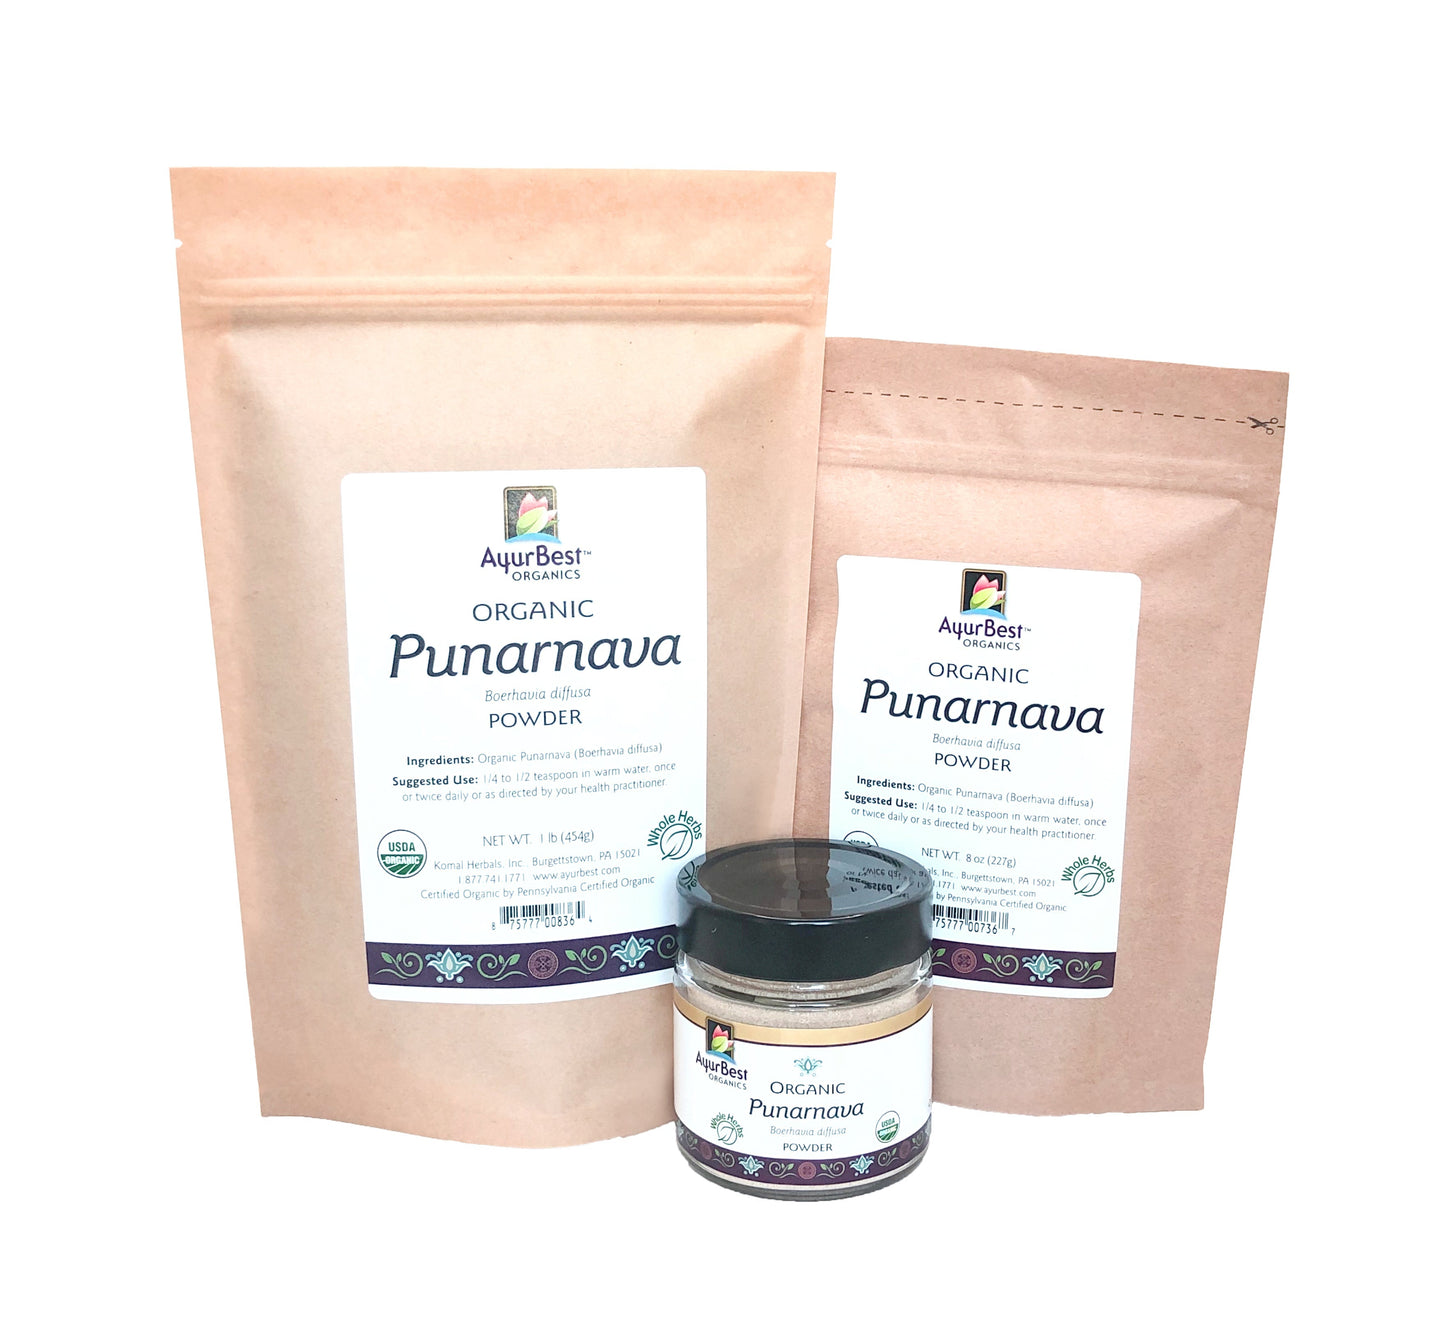 Wholesale Spices & Herbs - Punarnava Powder, Organic 1lb (454g) Bag